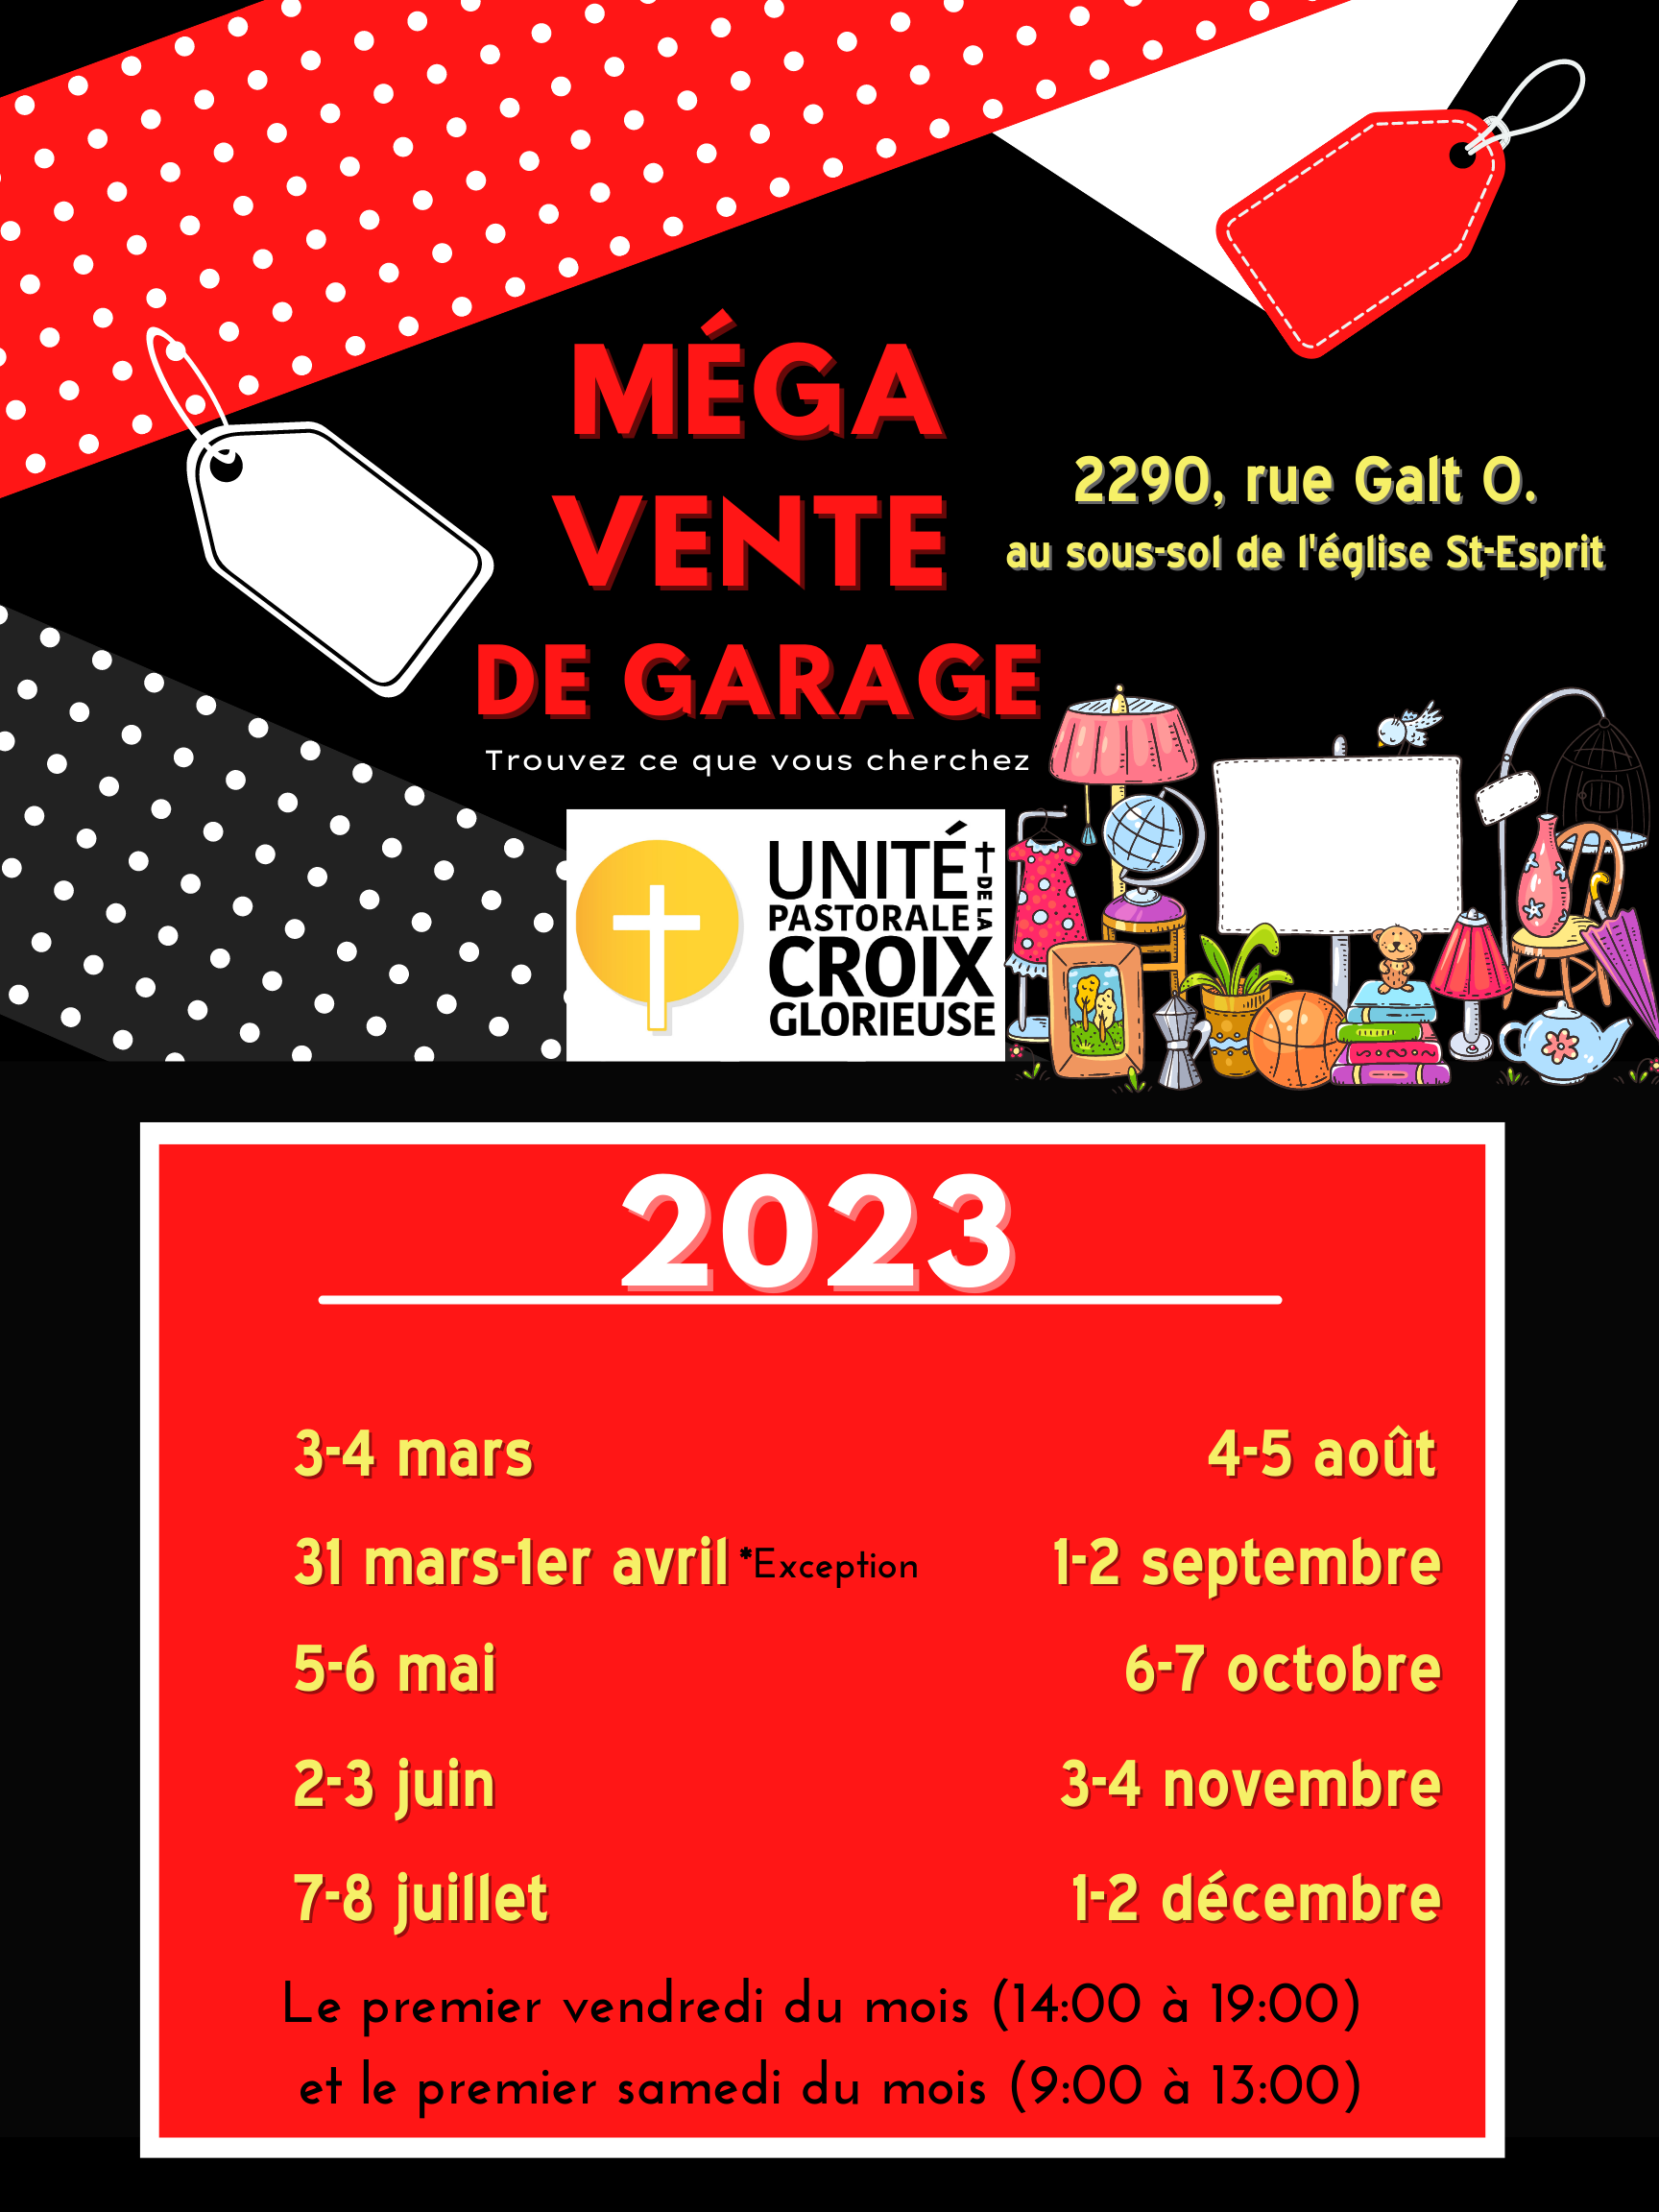 VENTE DE GARAGE poster 2023 photo